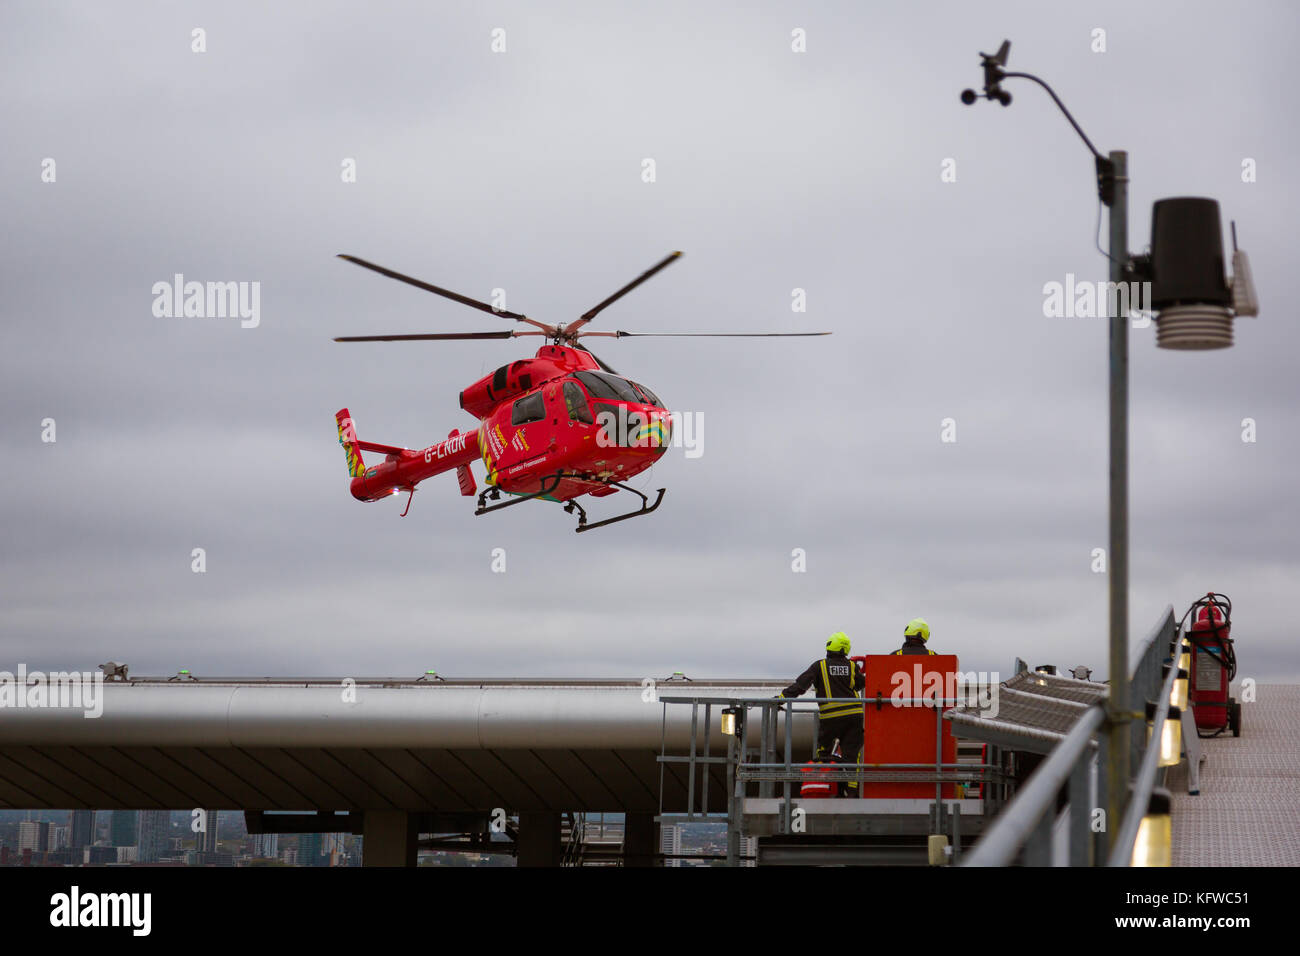 London Air Ambulance lands on the helipad of the Royal London Hospital Stock Photo